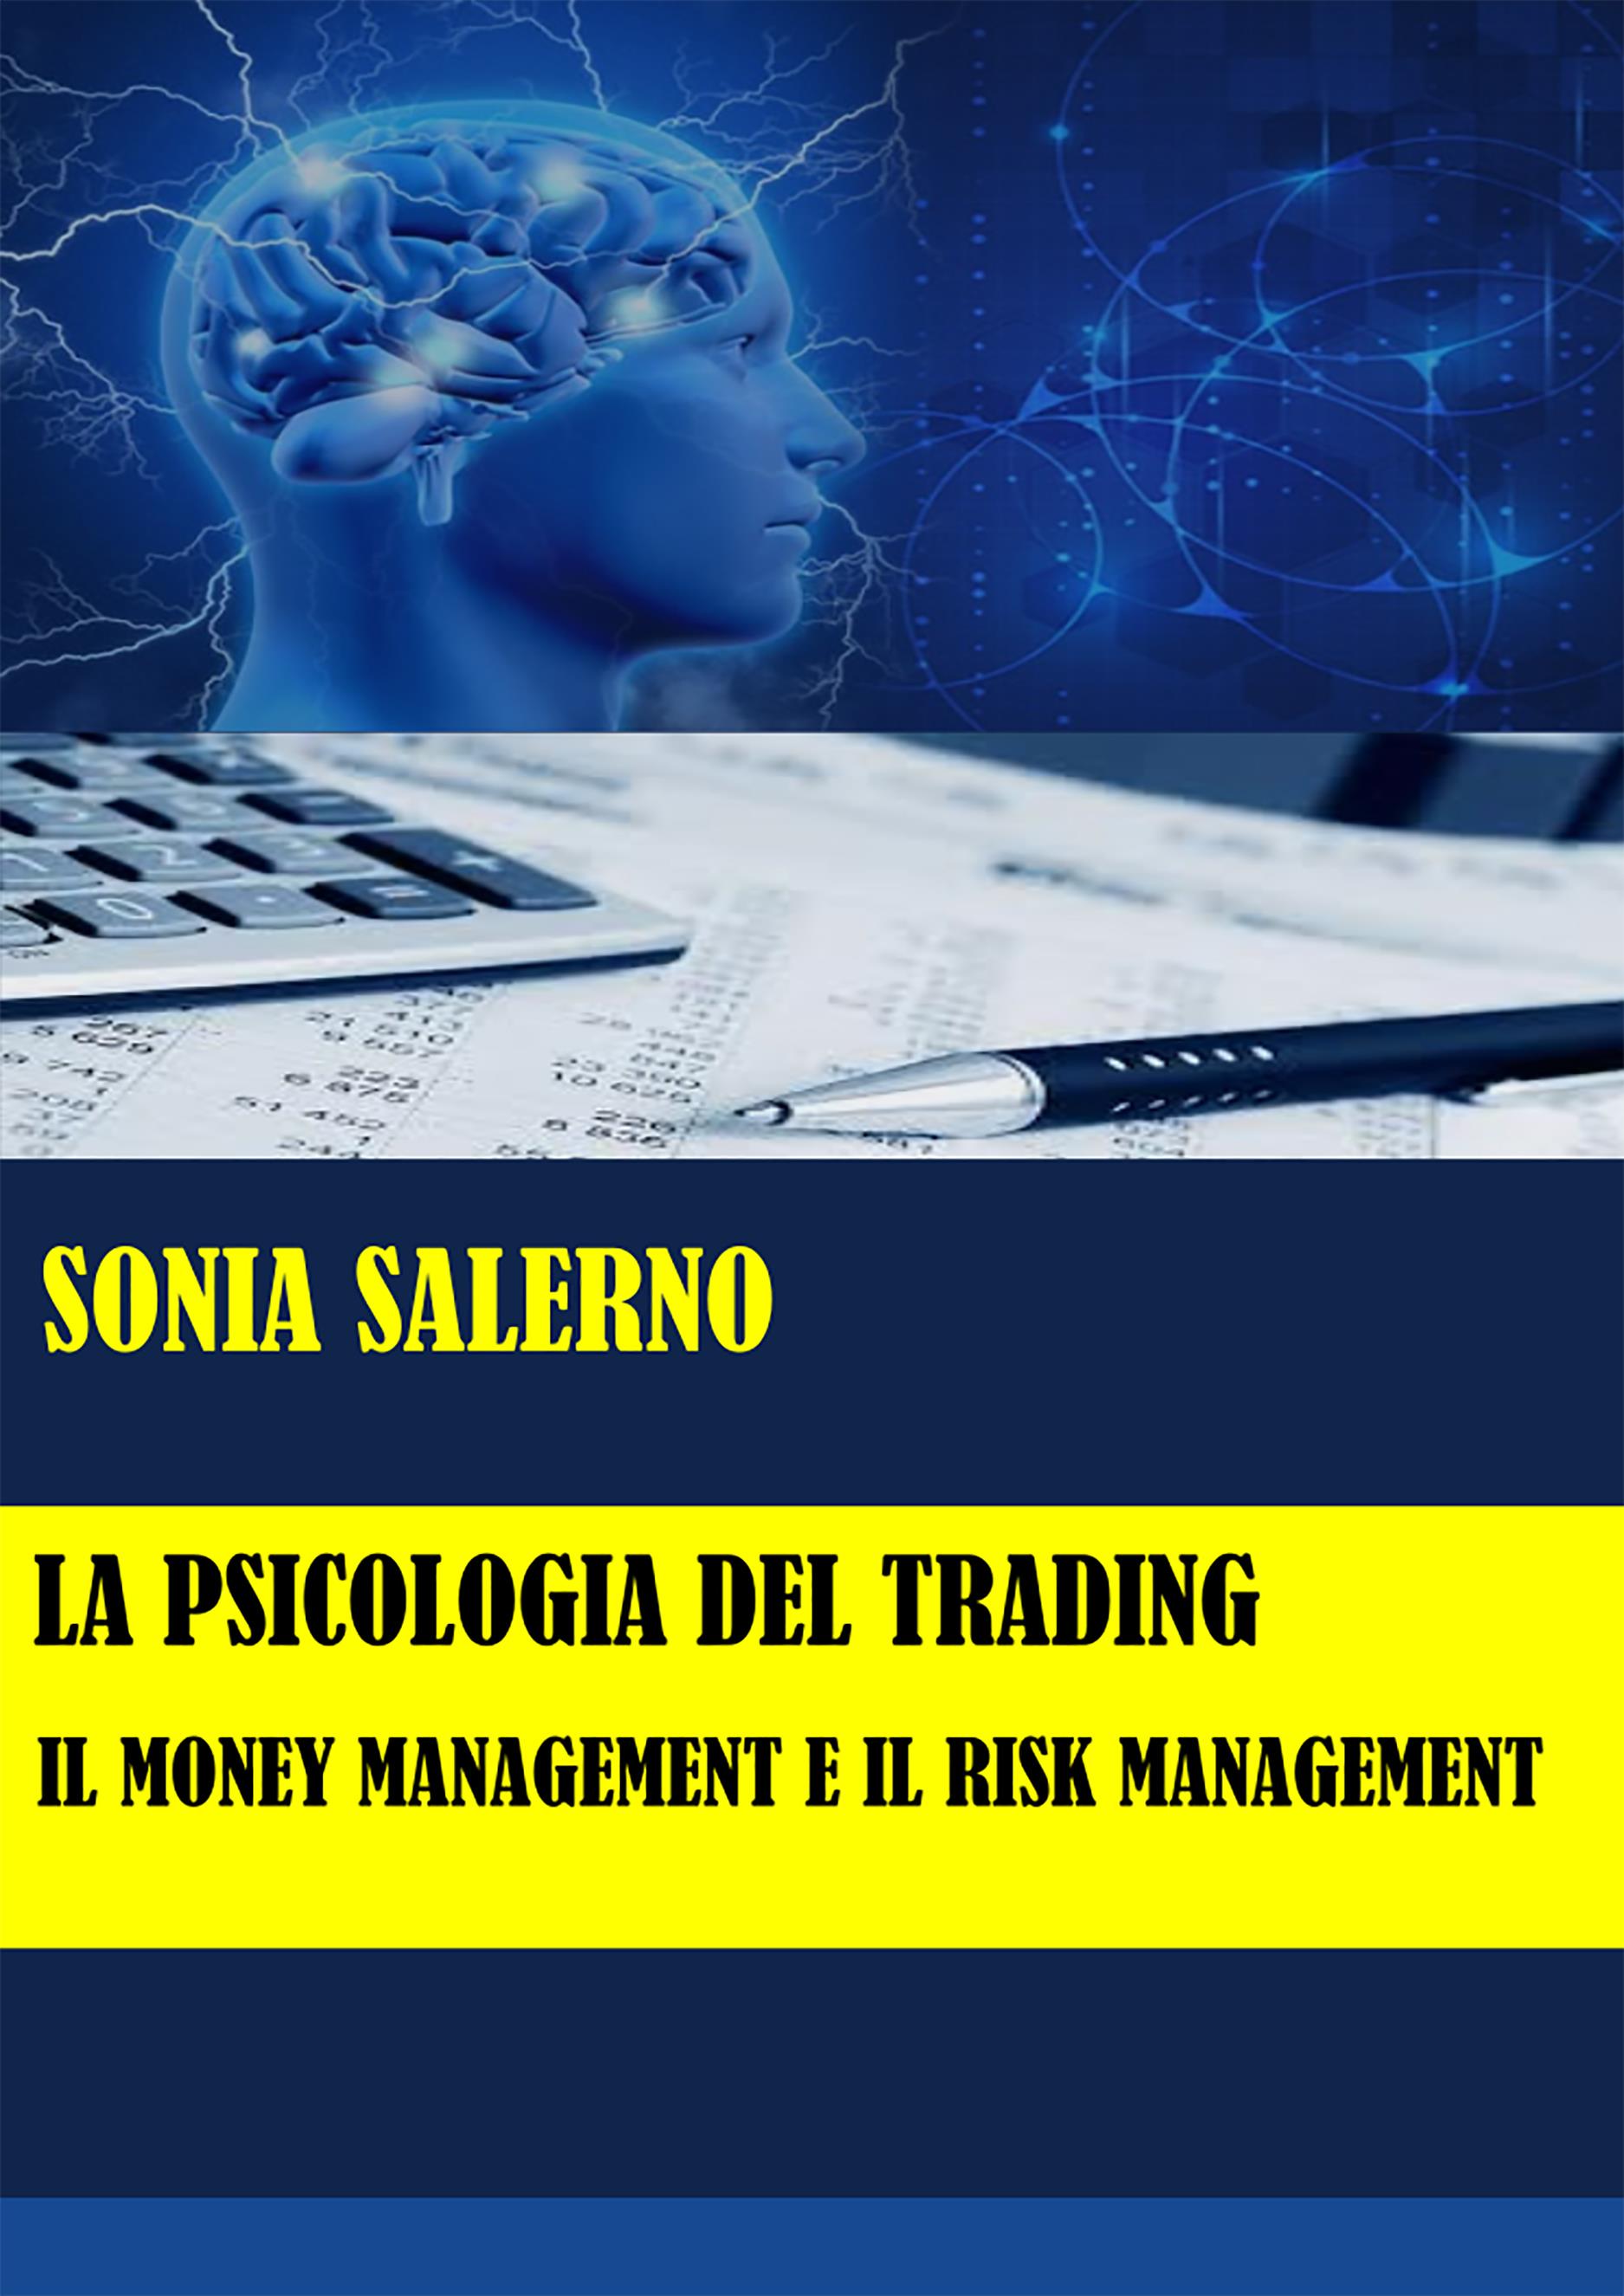 La psicologia del trading: il money management e il risk management